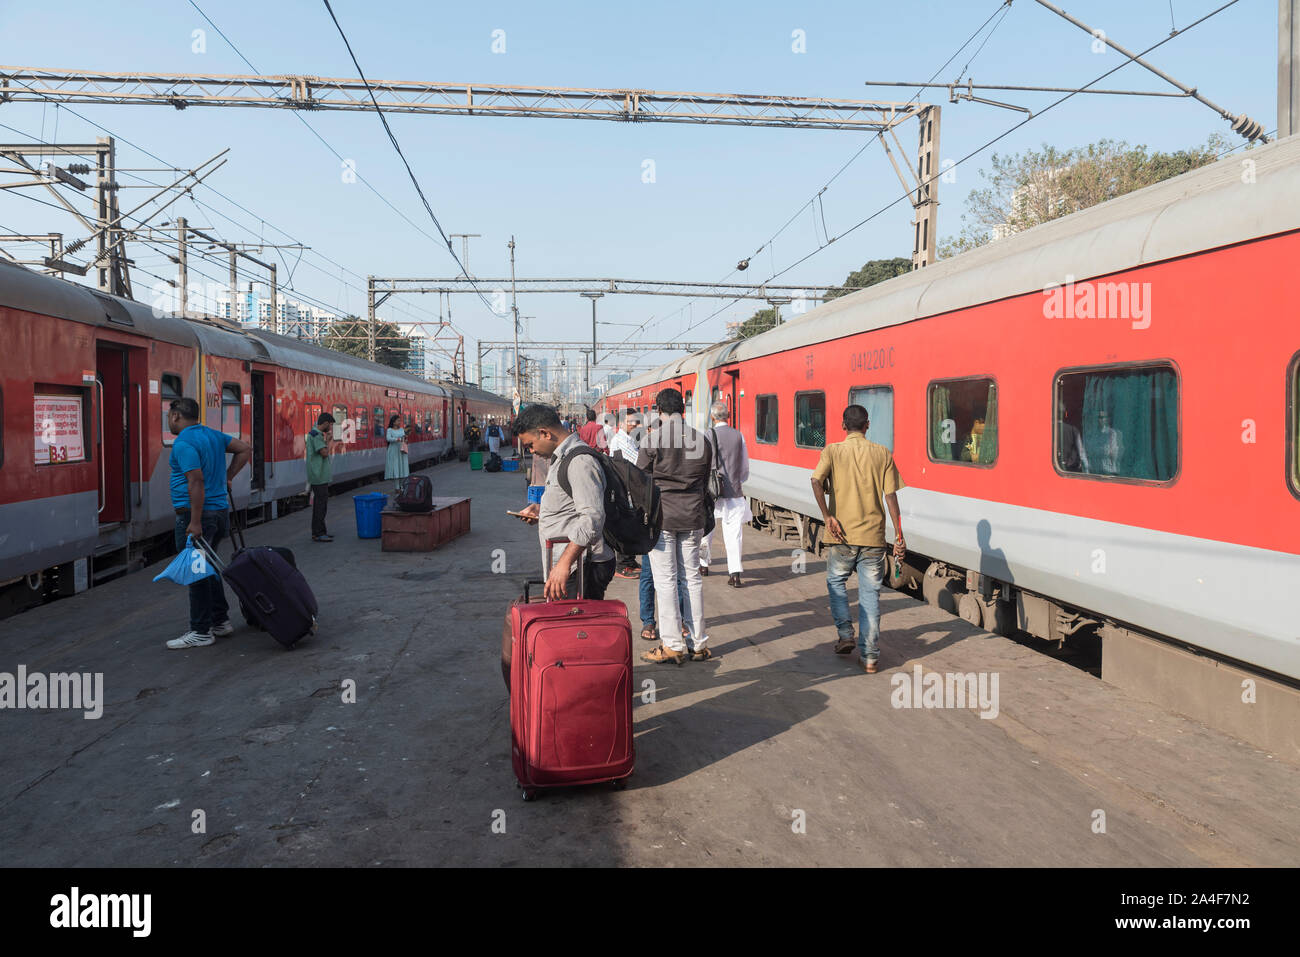 Passengers board the Mumbai Rajdhani express train at Mumbai central station in India. Stock Photo